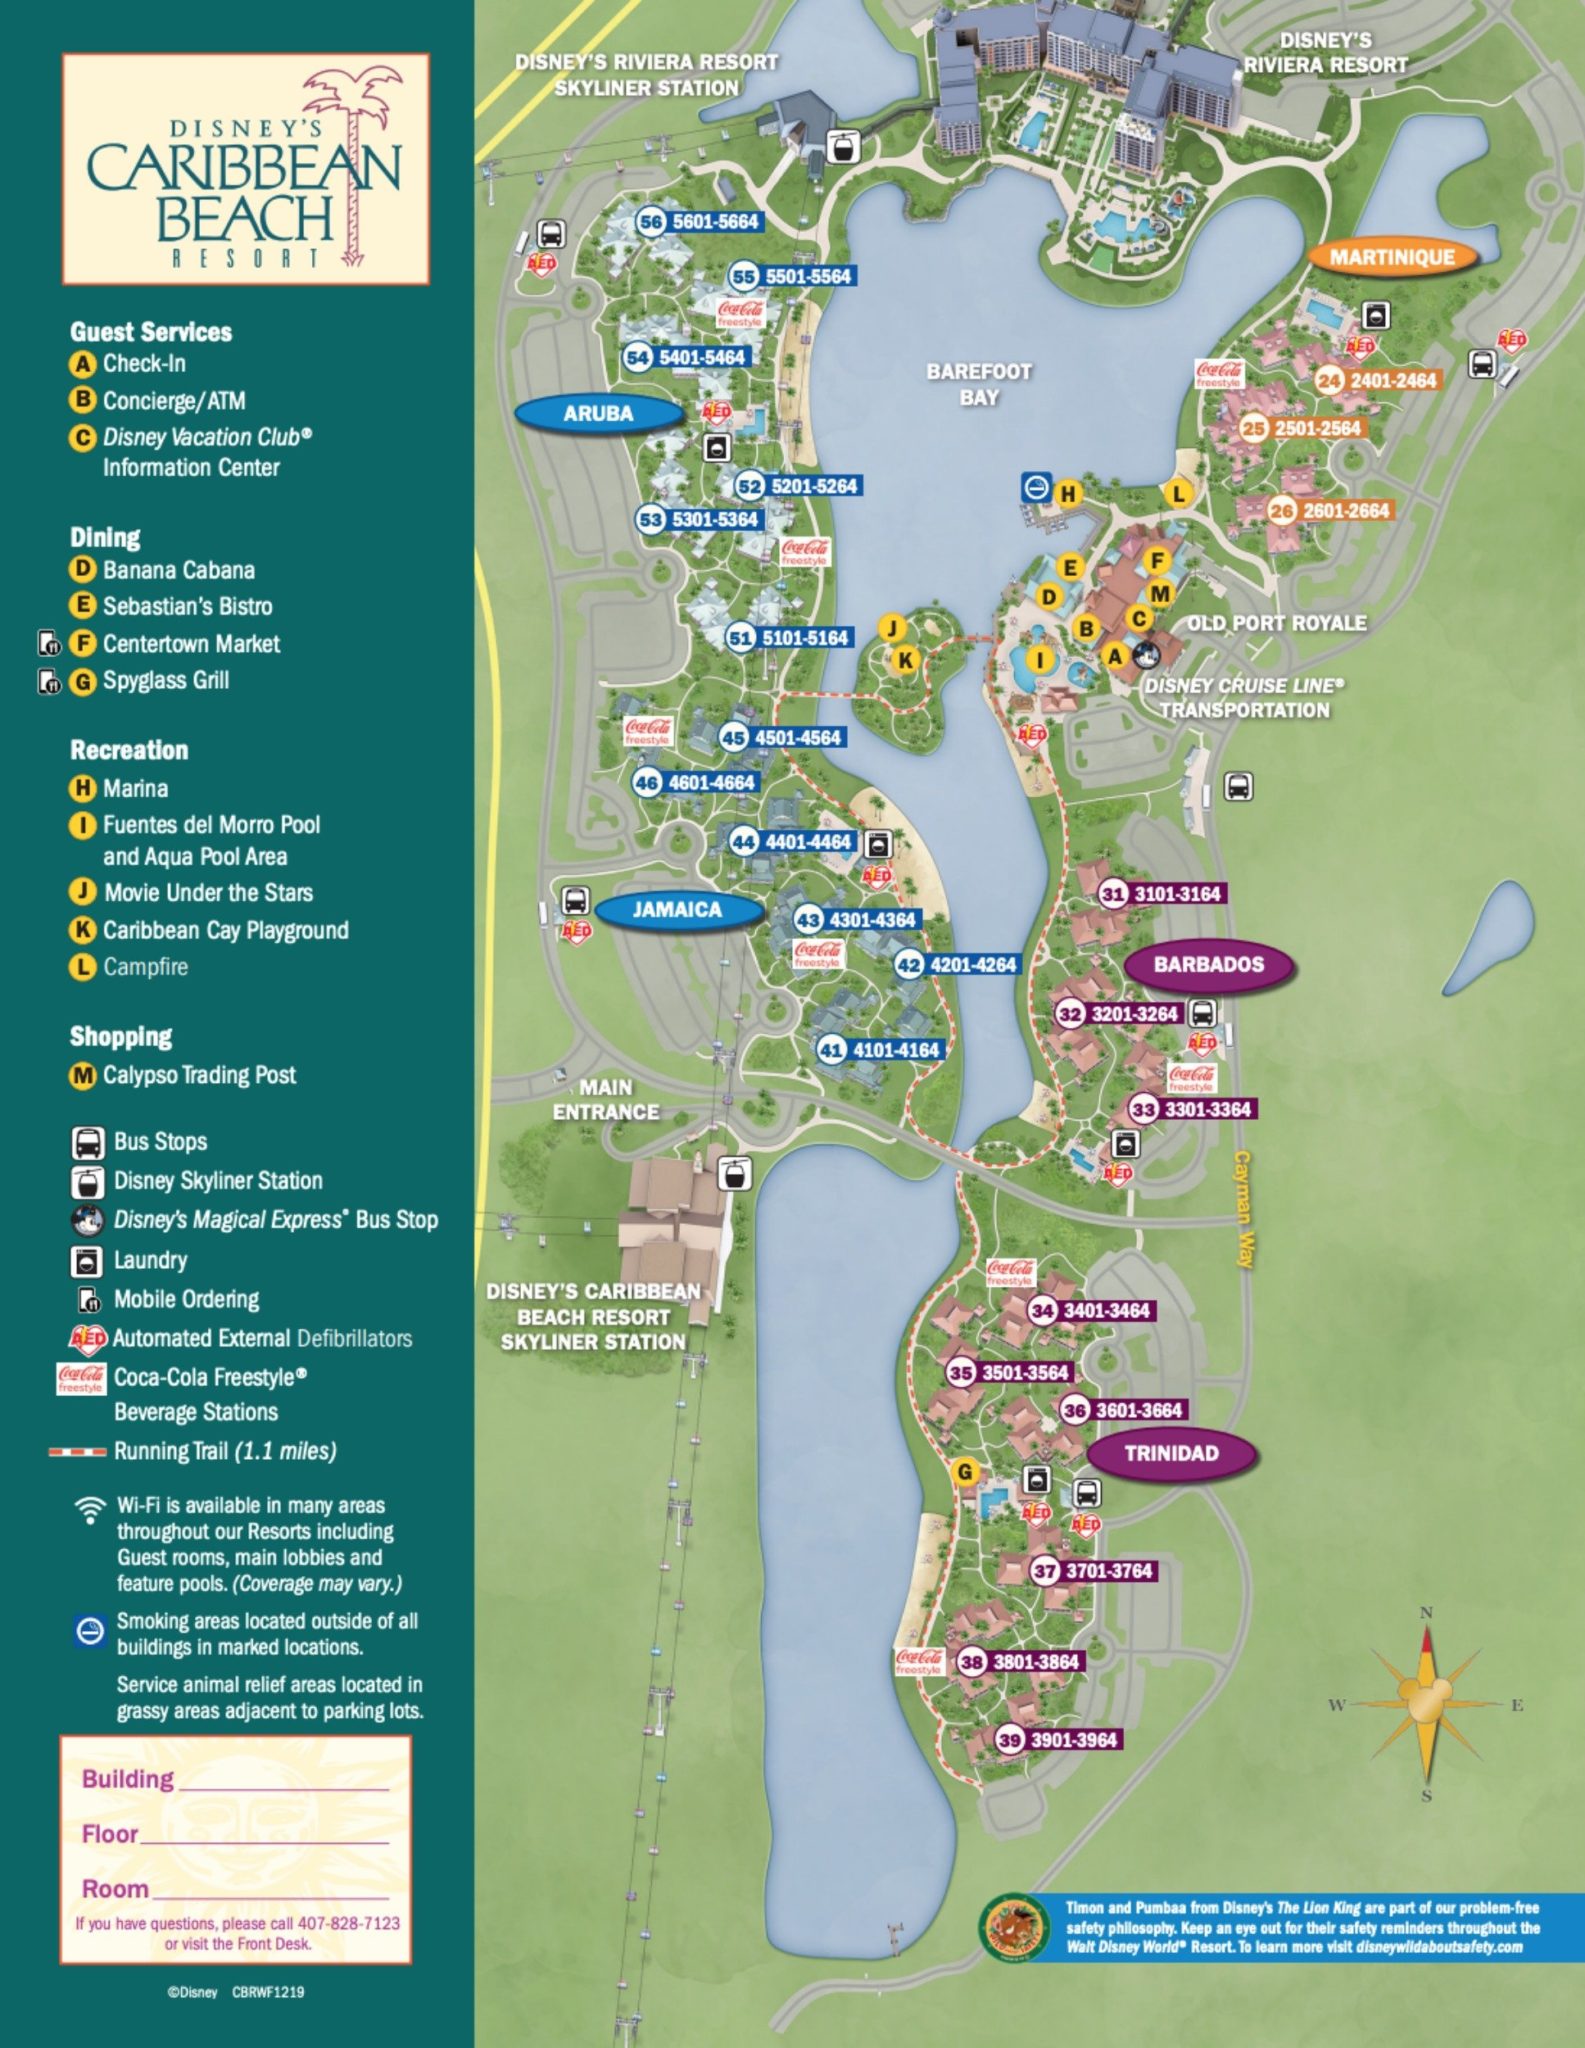 Walt Disney World Caribbean Beach Resort map scaled